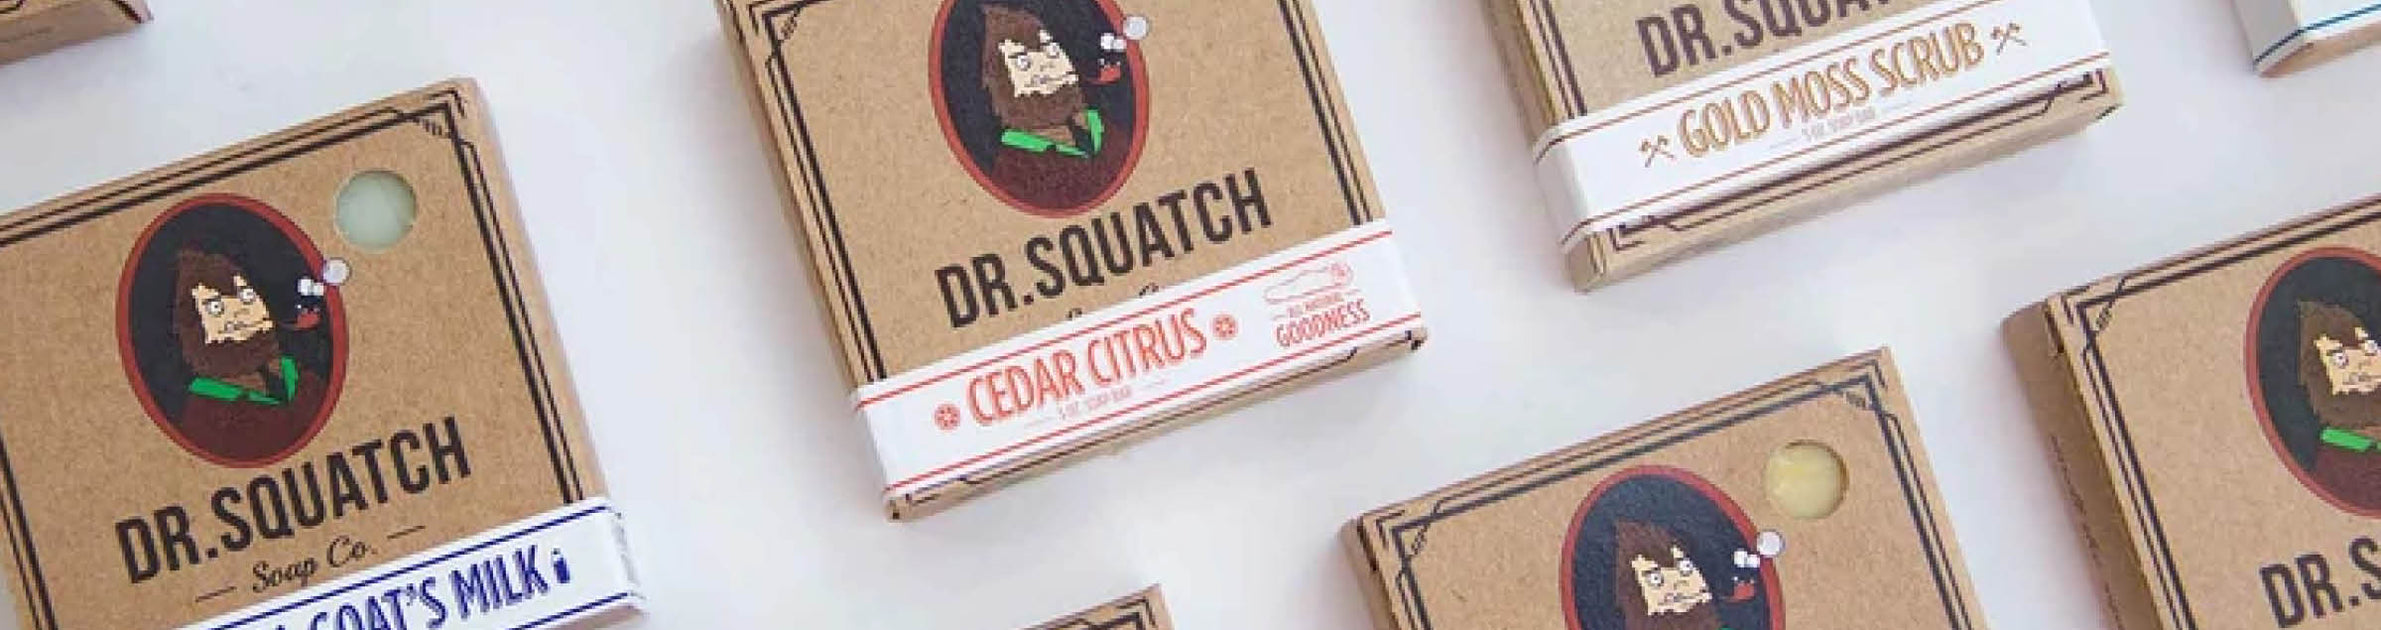 Deodorant & Soap Set - Dr. Squatch